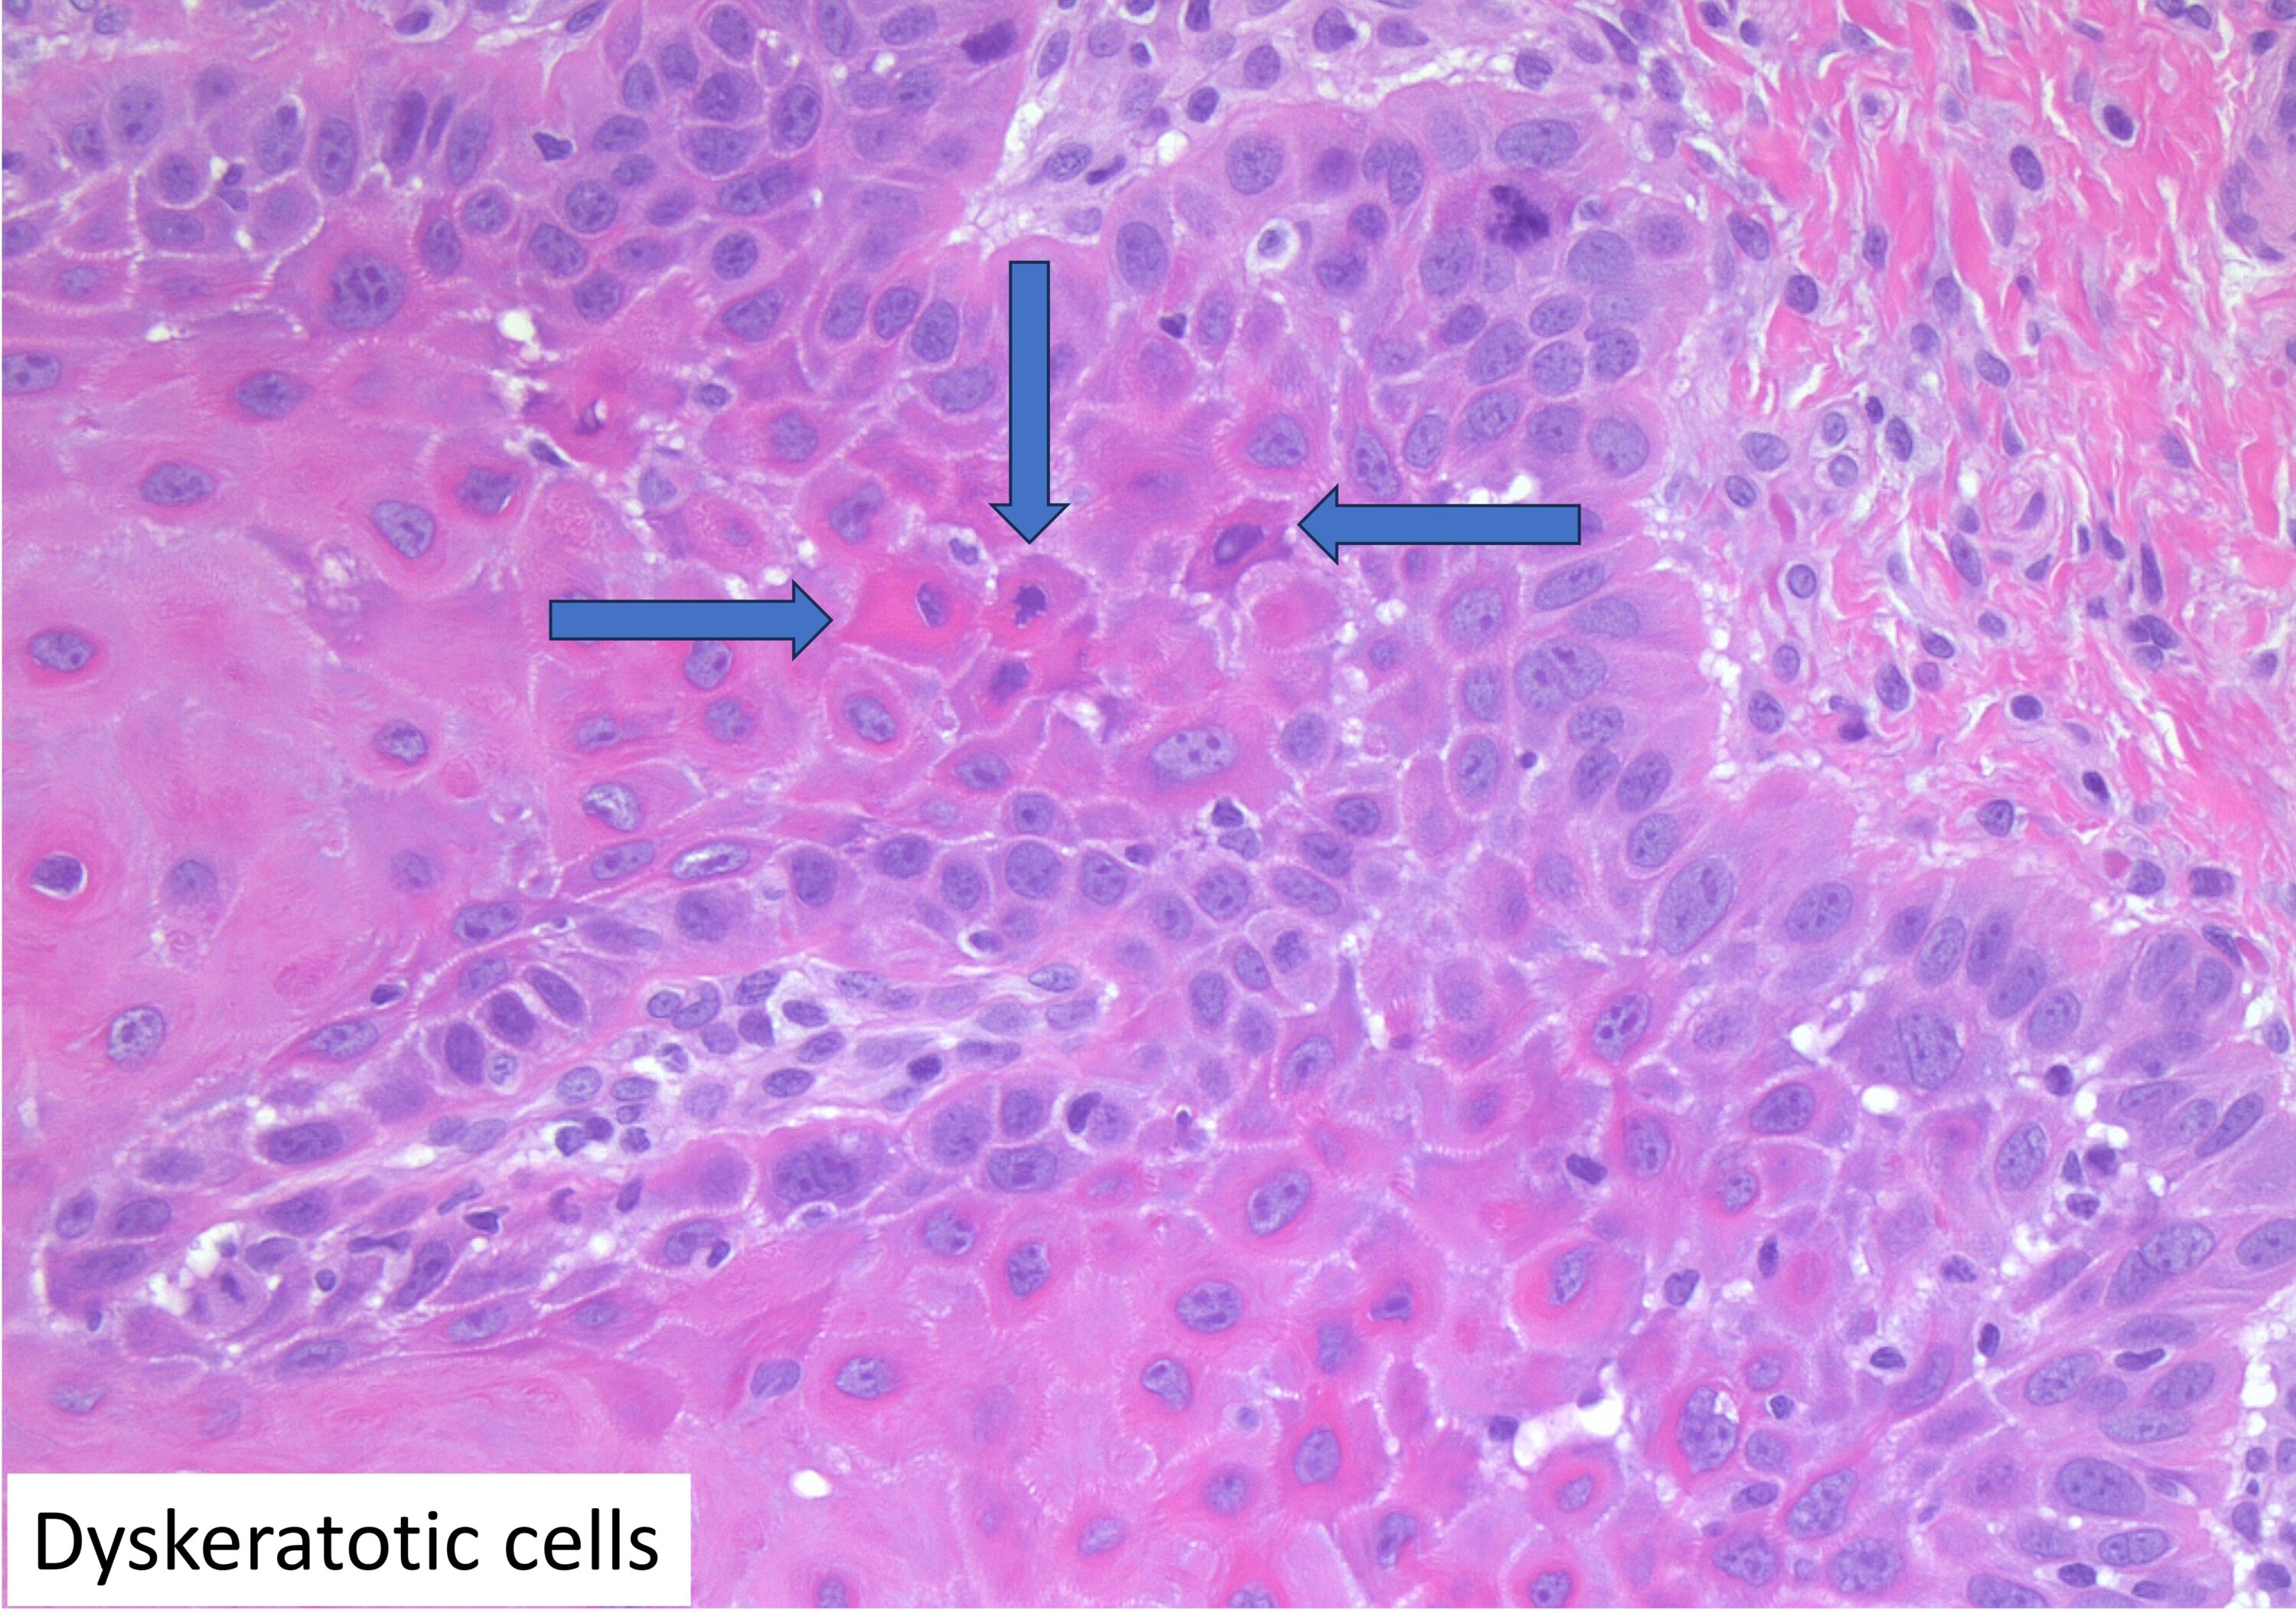 Dyskeratotic cells